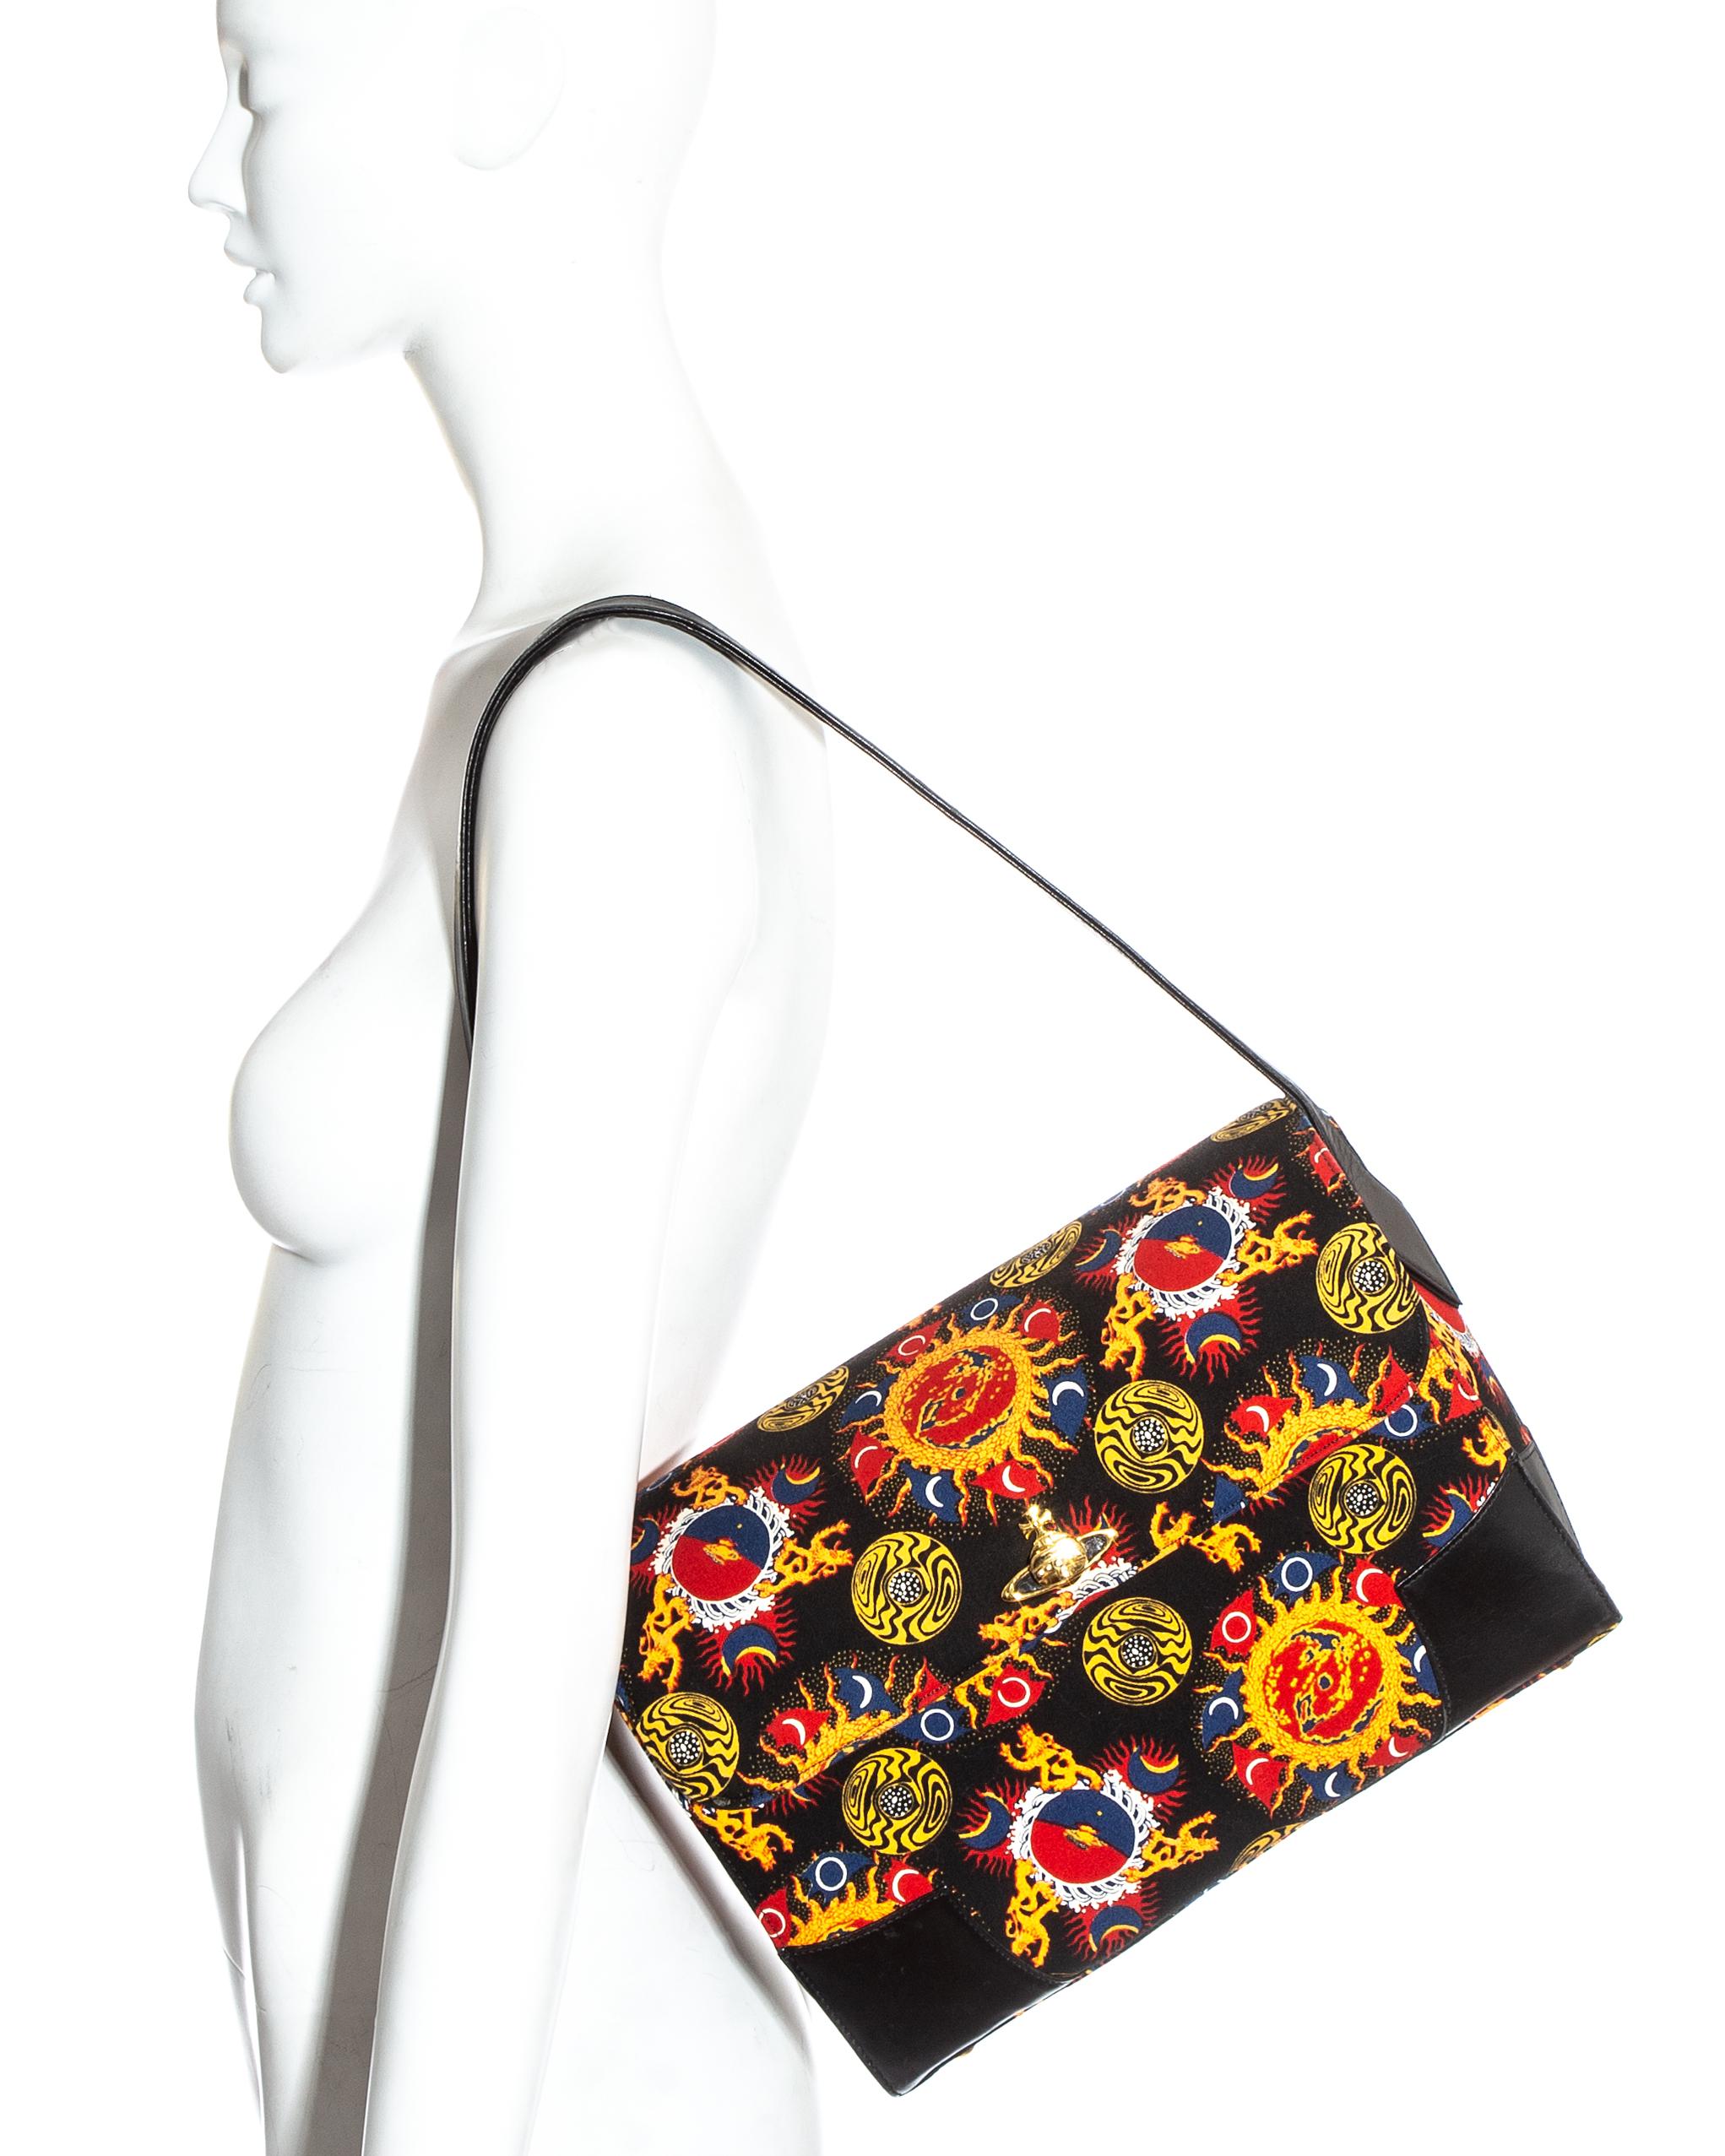 Vivienne Westwood Galaxy print cotton and leather shoulder flap bag

c. 1995